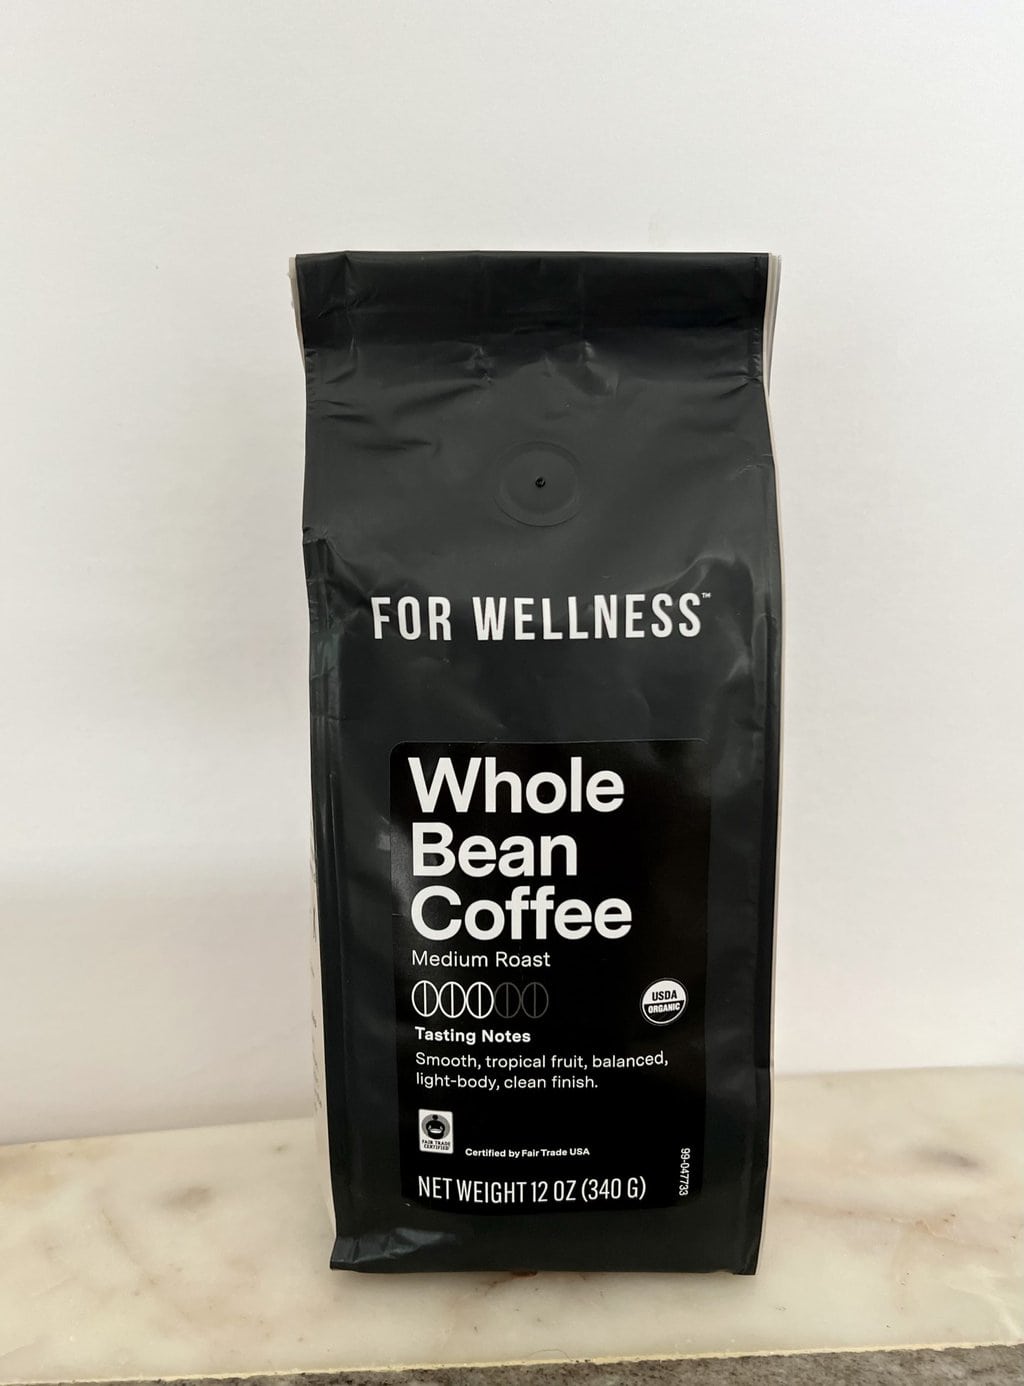 For Wellness Whole Bean Coffee Medium Roast pack